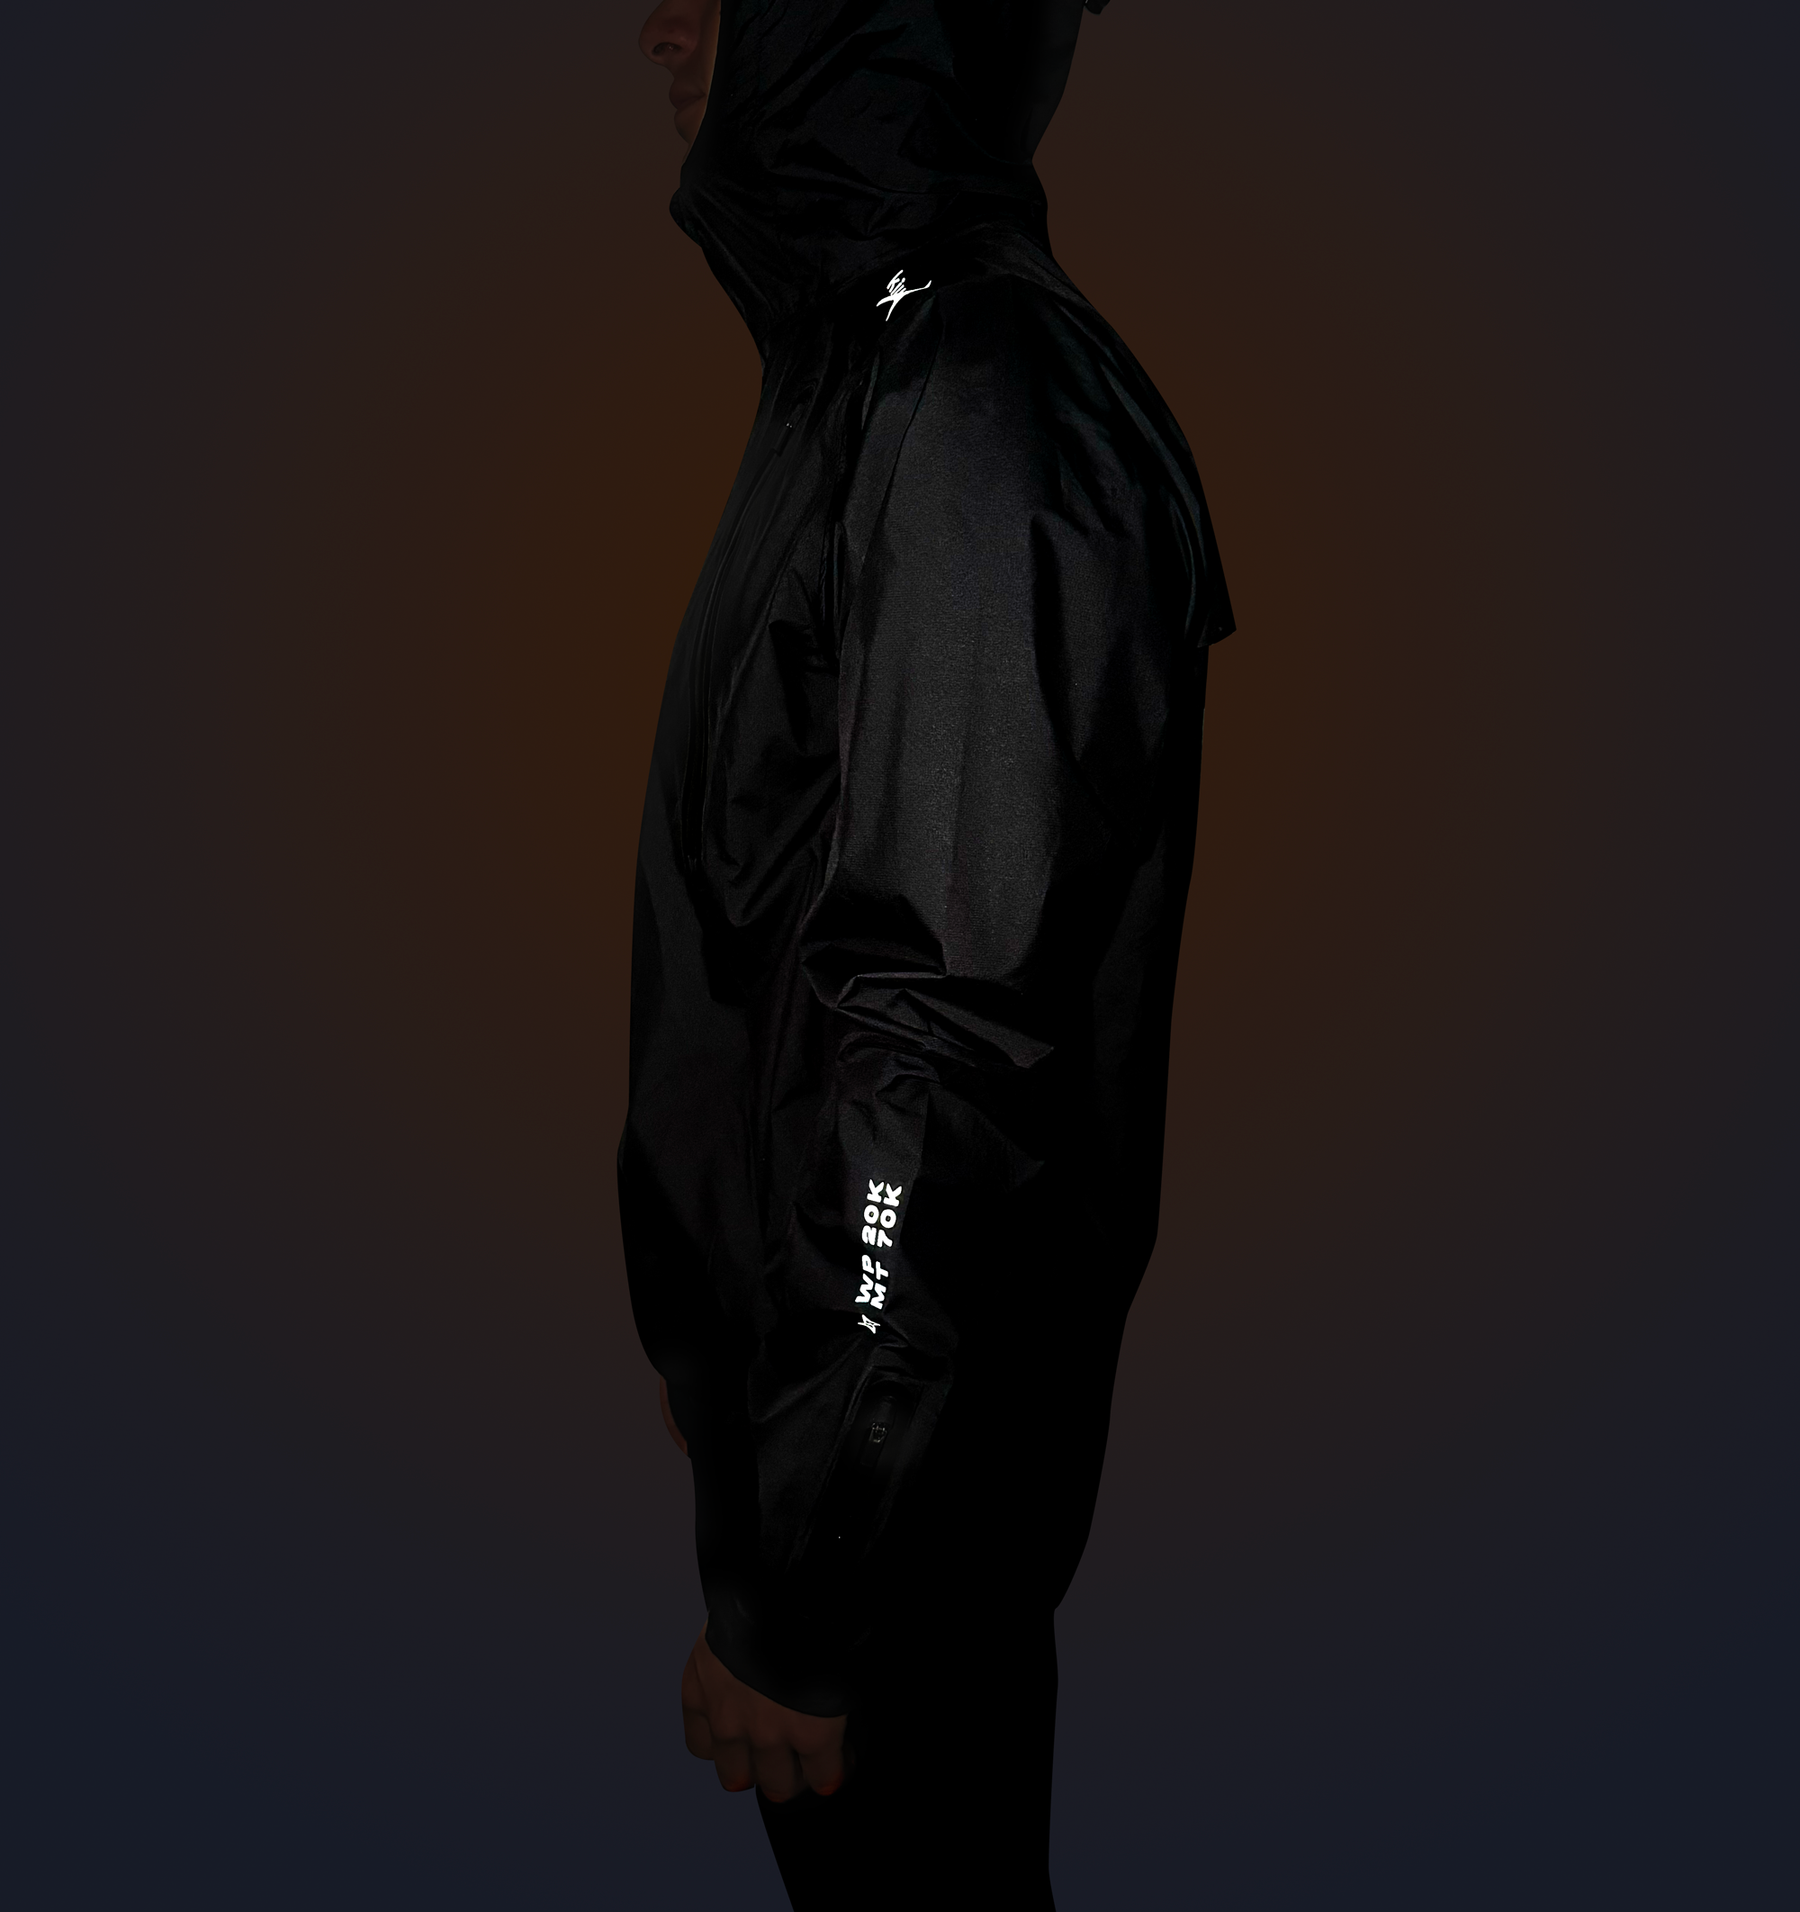 Men's Waterproof Windbreaker Jacket VOS - Black - 3X-Large 